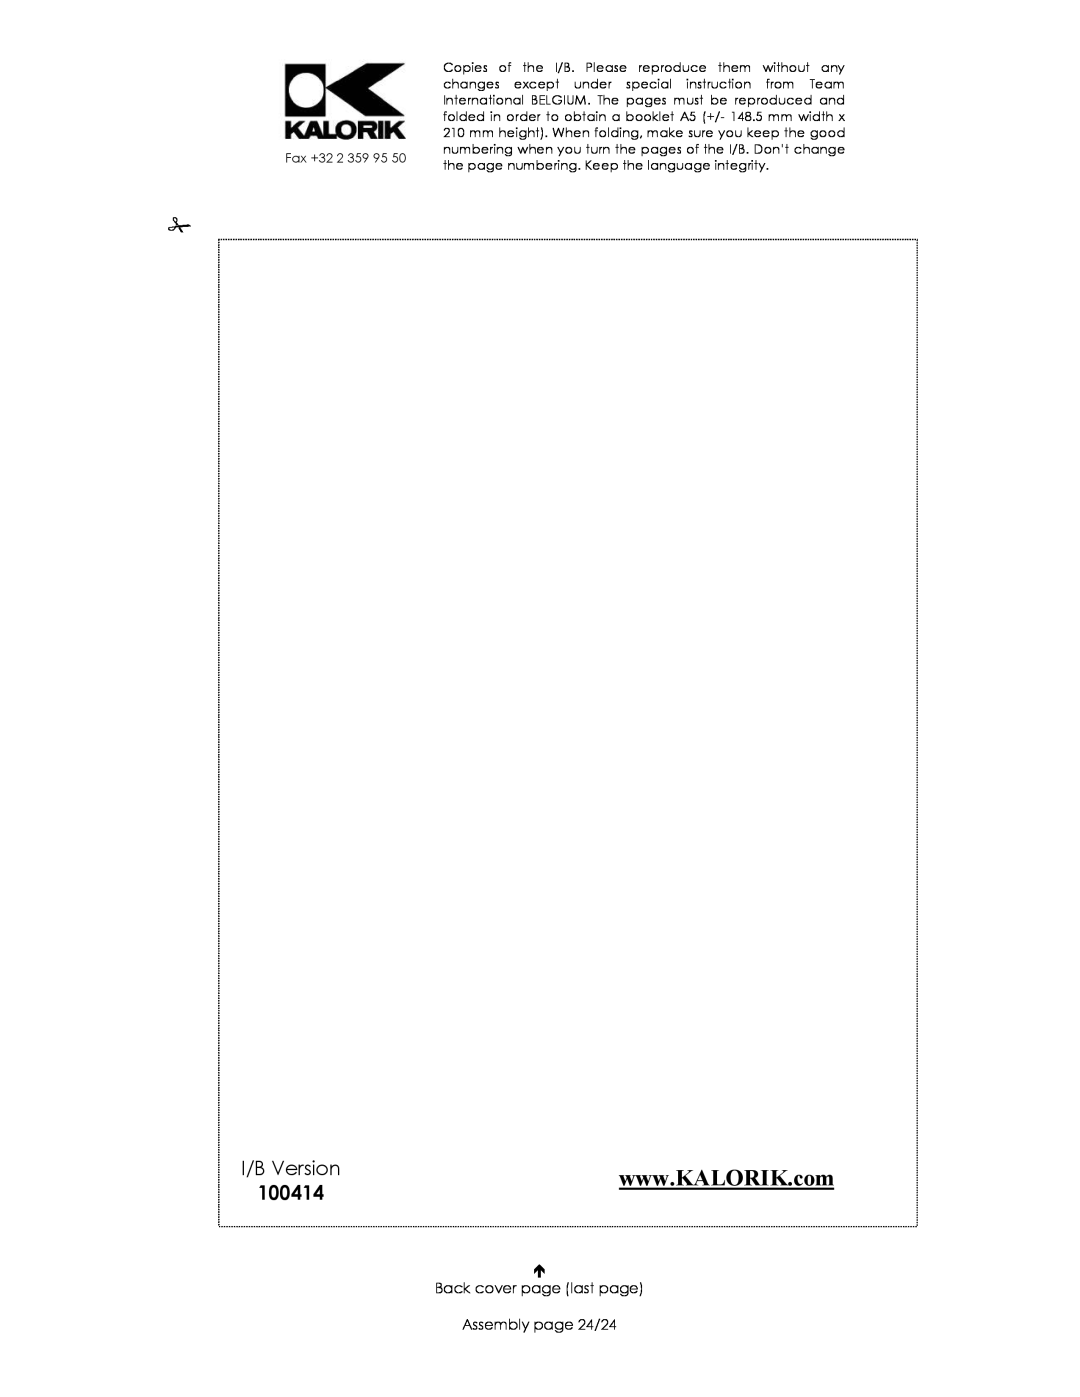 Kalorik 14246 - 33001 manual 100414, I/B Version, Back cover page last page Assembly page 24/24 